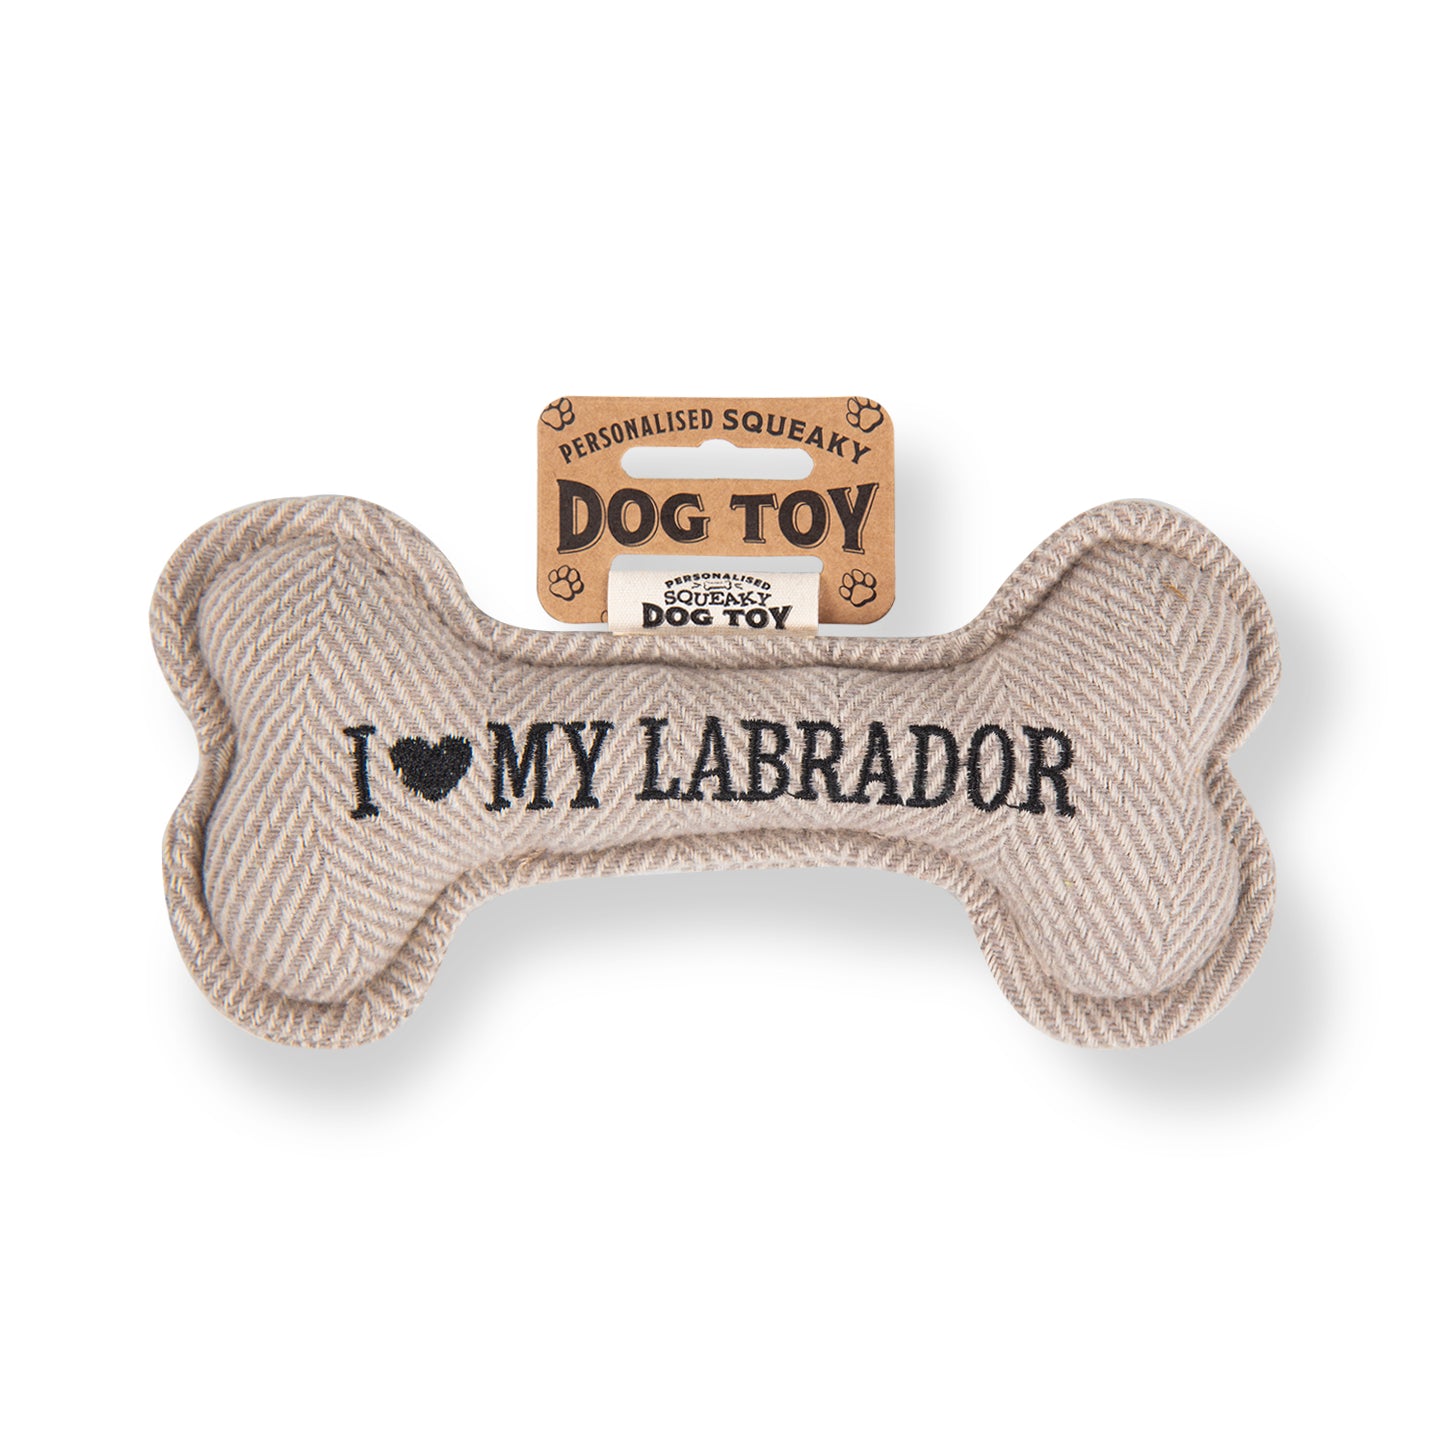 Squeaky Bone Dog Toy - I Love My Labrador